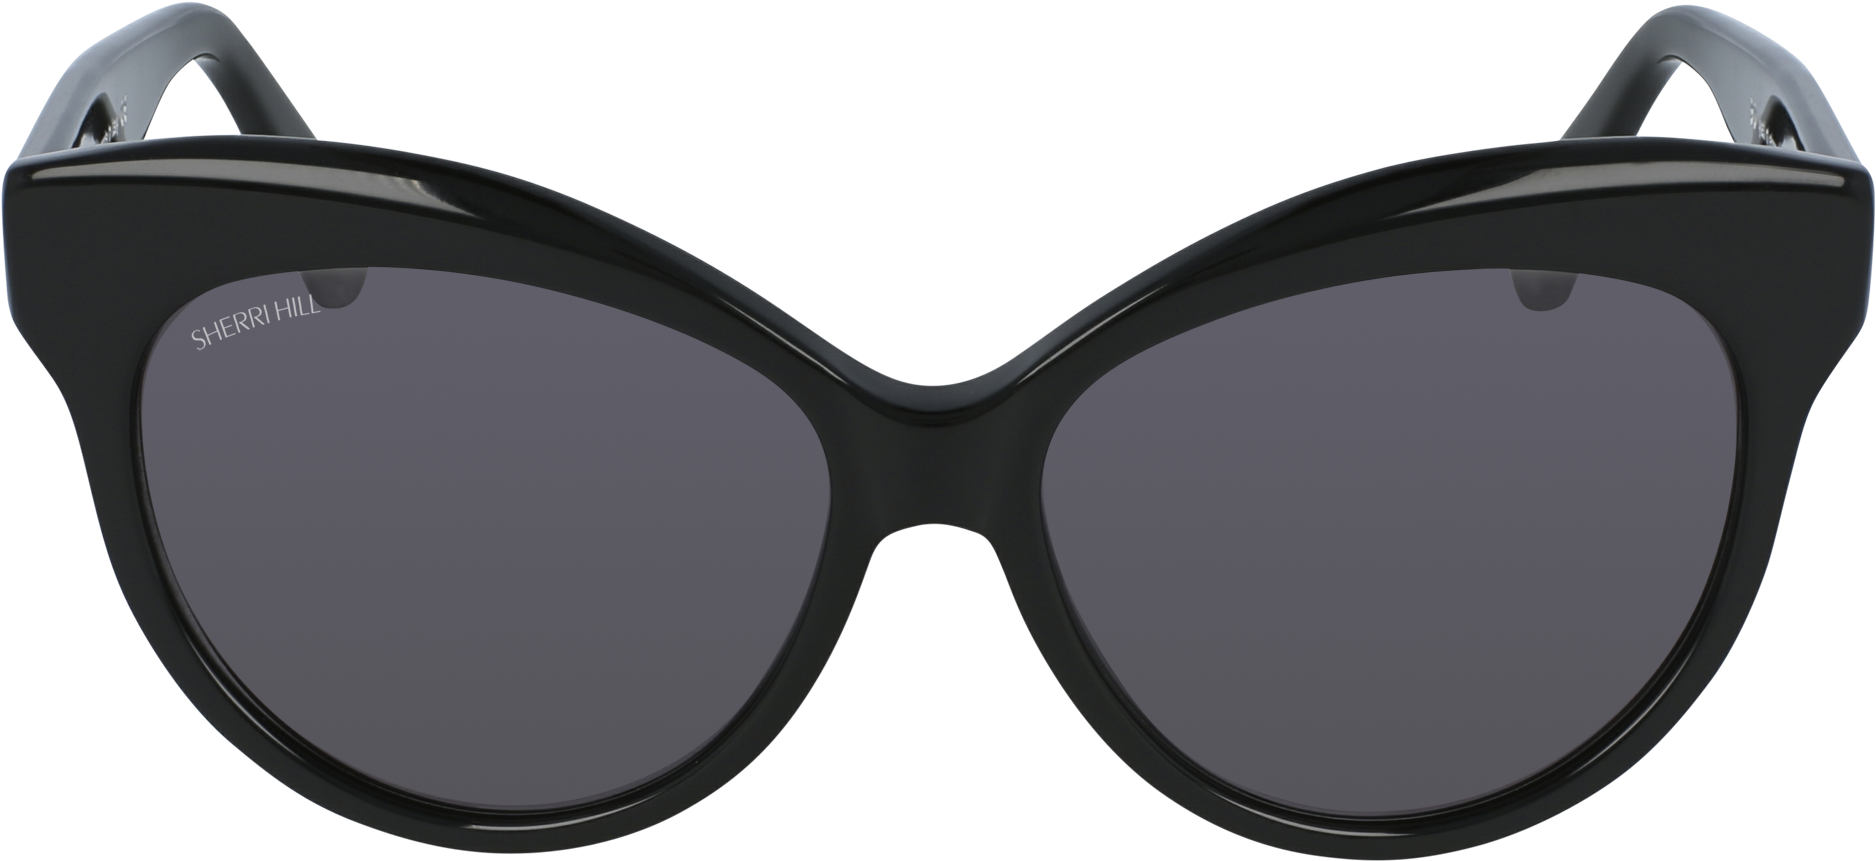 Black Designer Sunglasses Product Showcase PNG